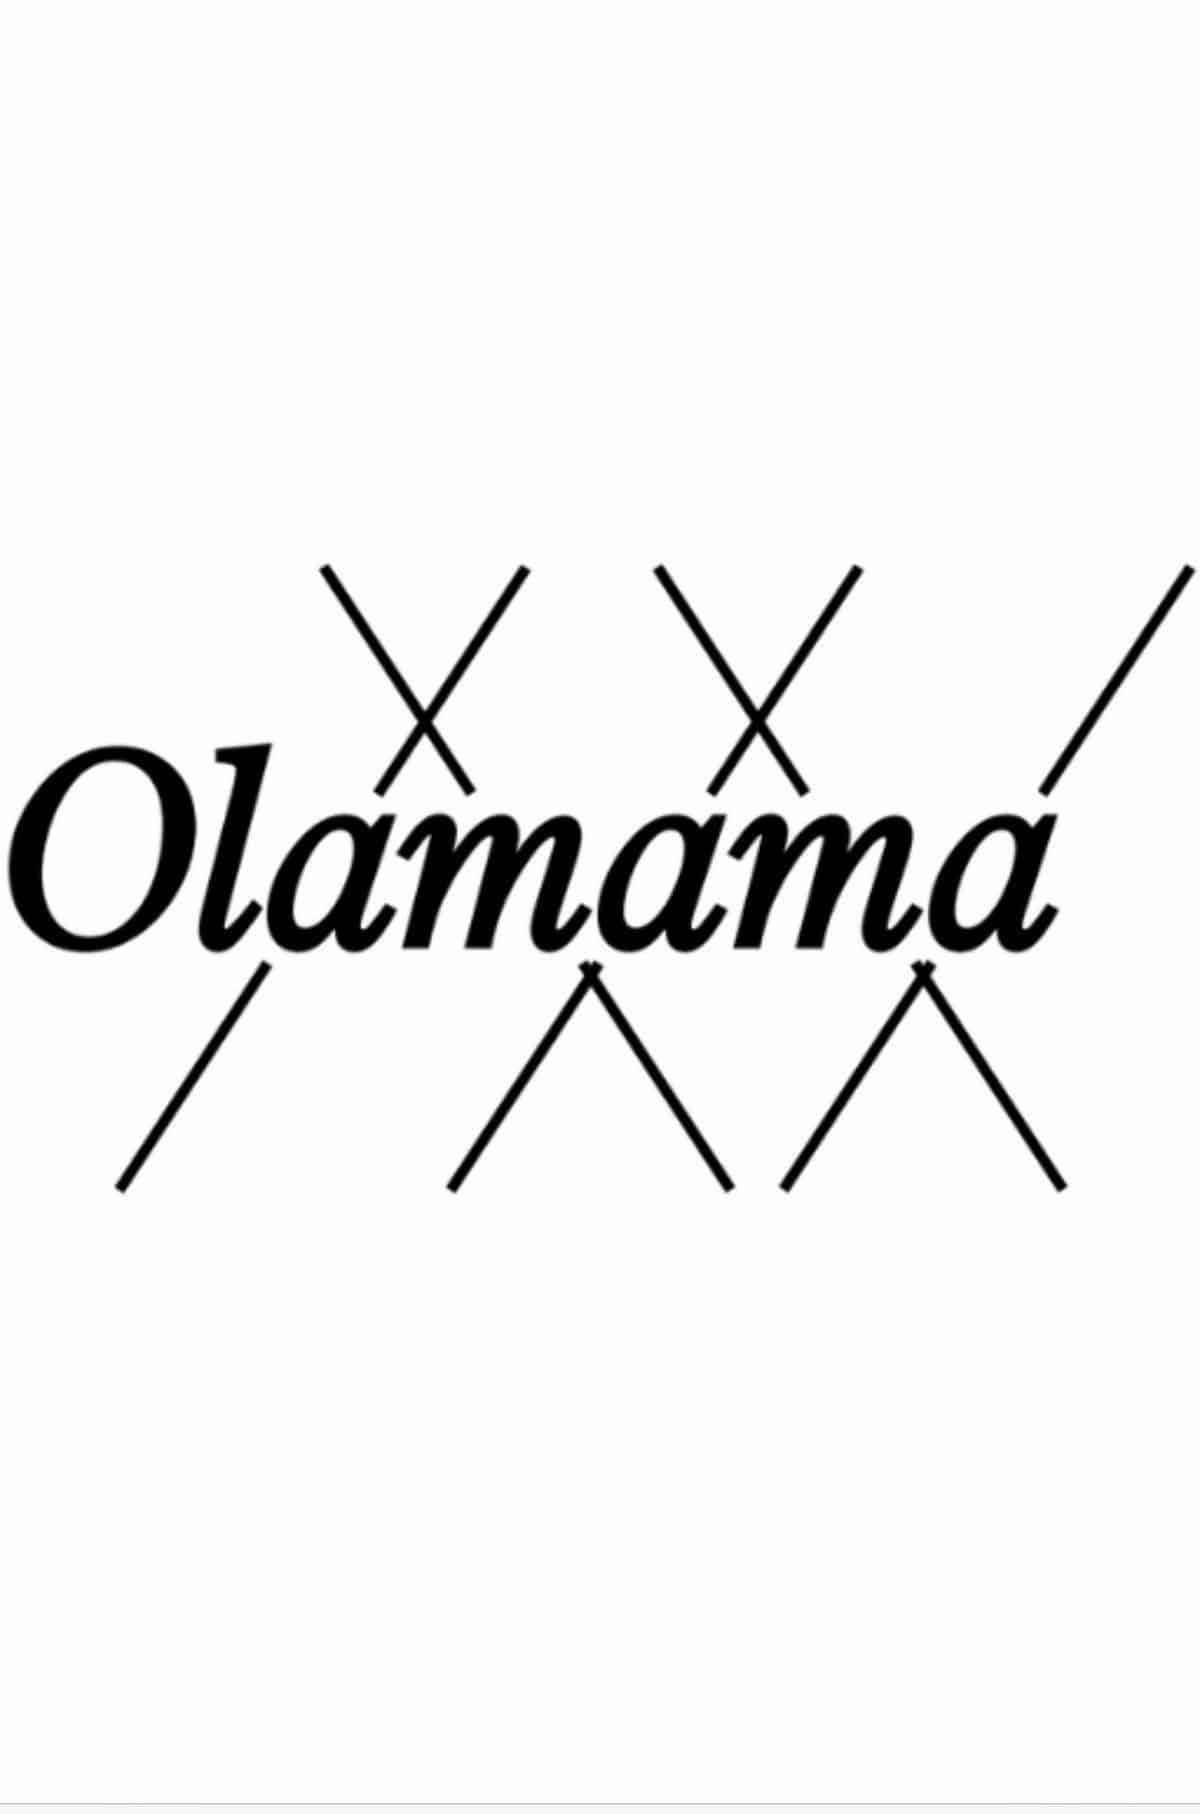 (c) Olamama.net